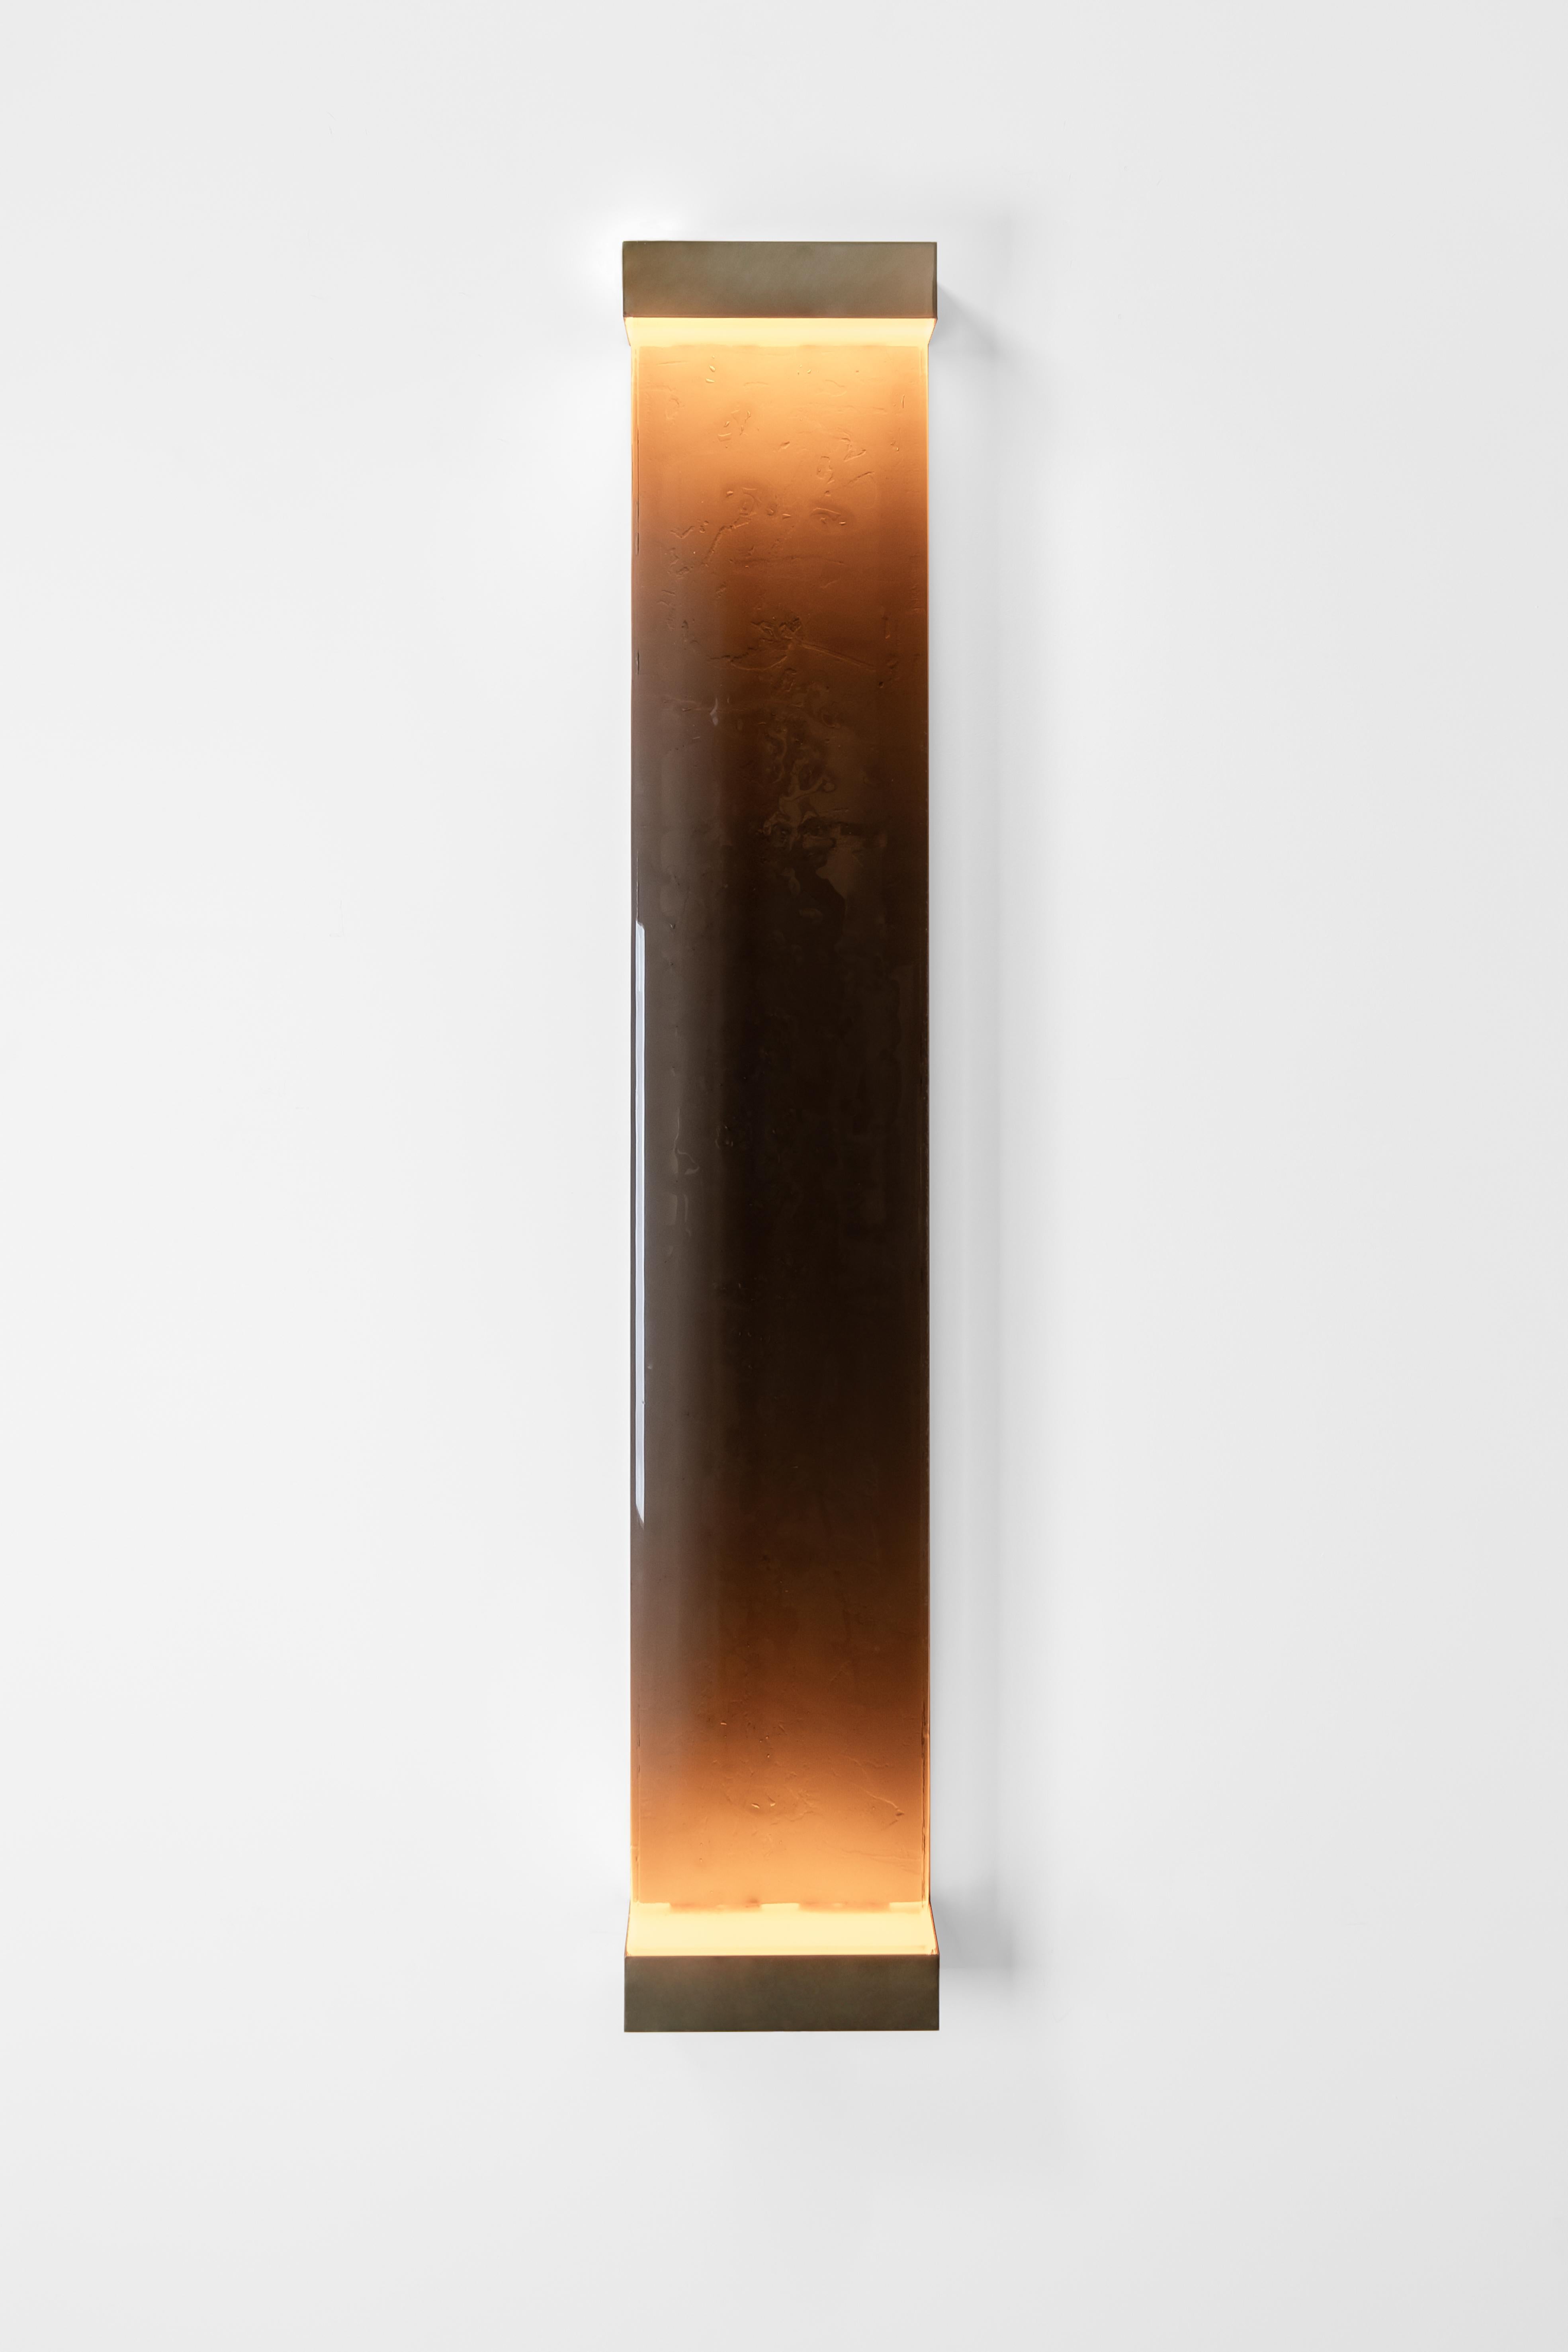 Jud Wall Lamp by Draga & Aurel For Sale 5